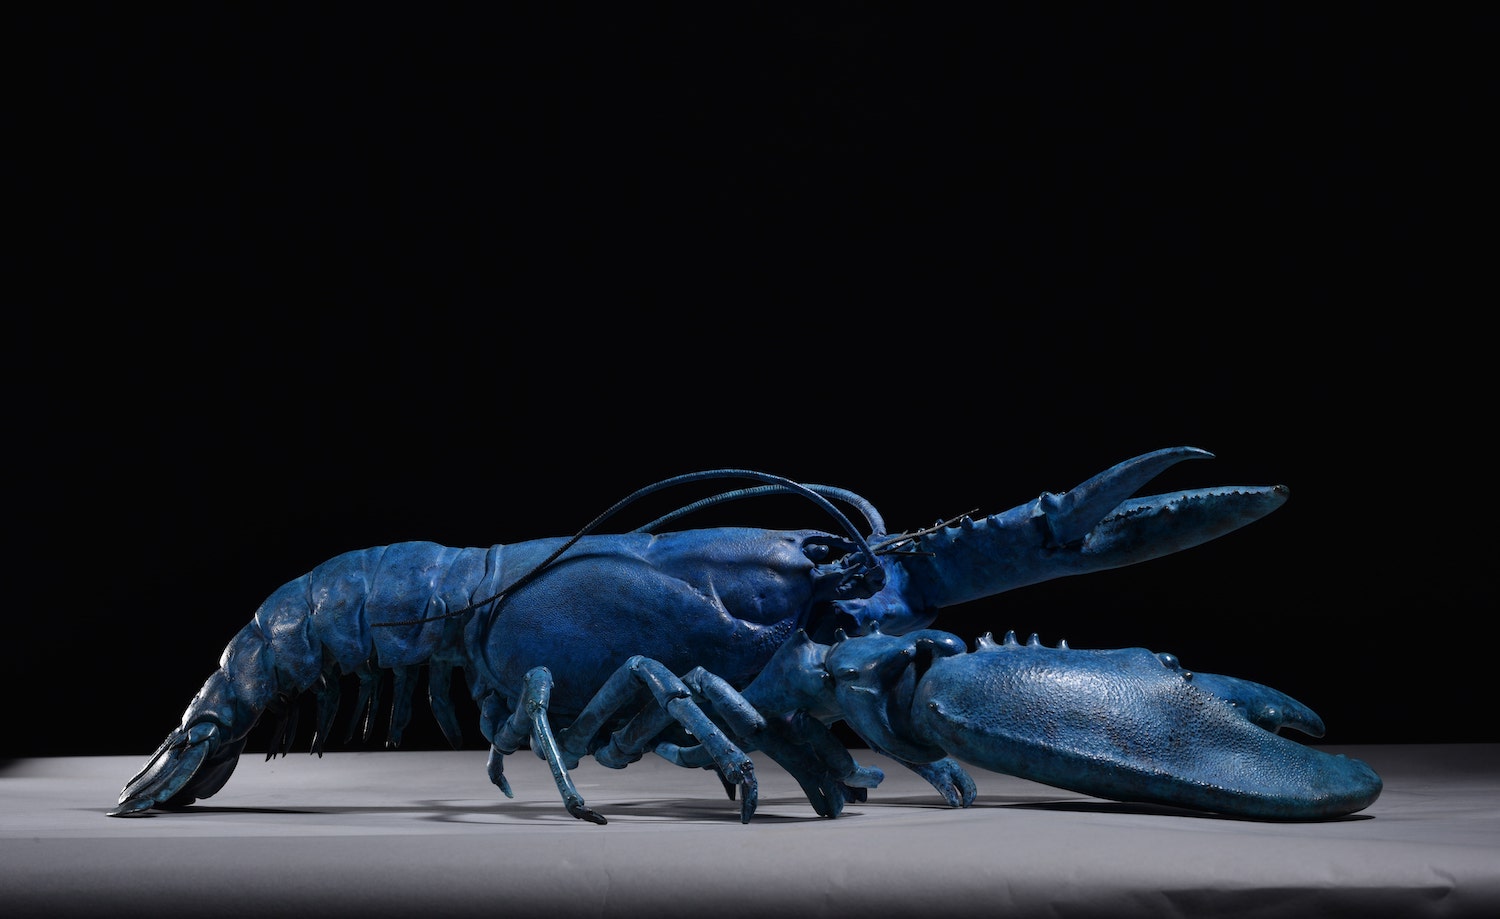 Mackie bronze sculpture of blue lobster